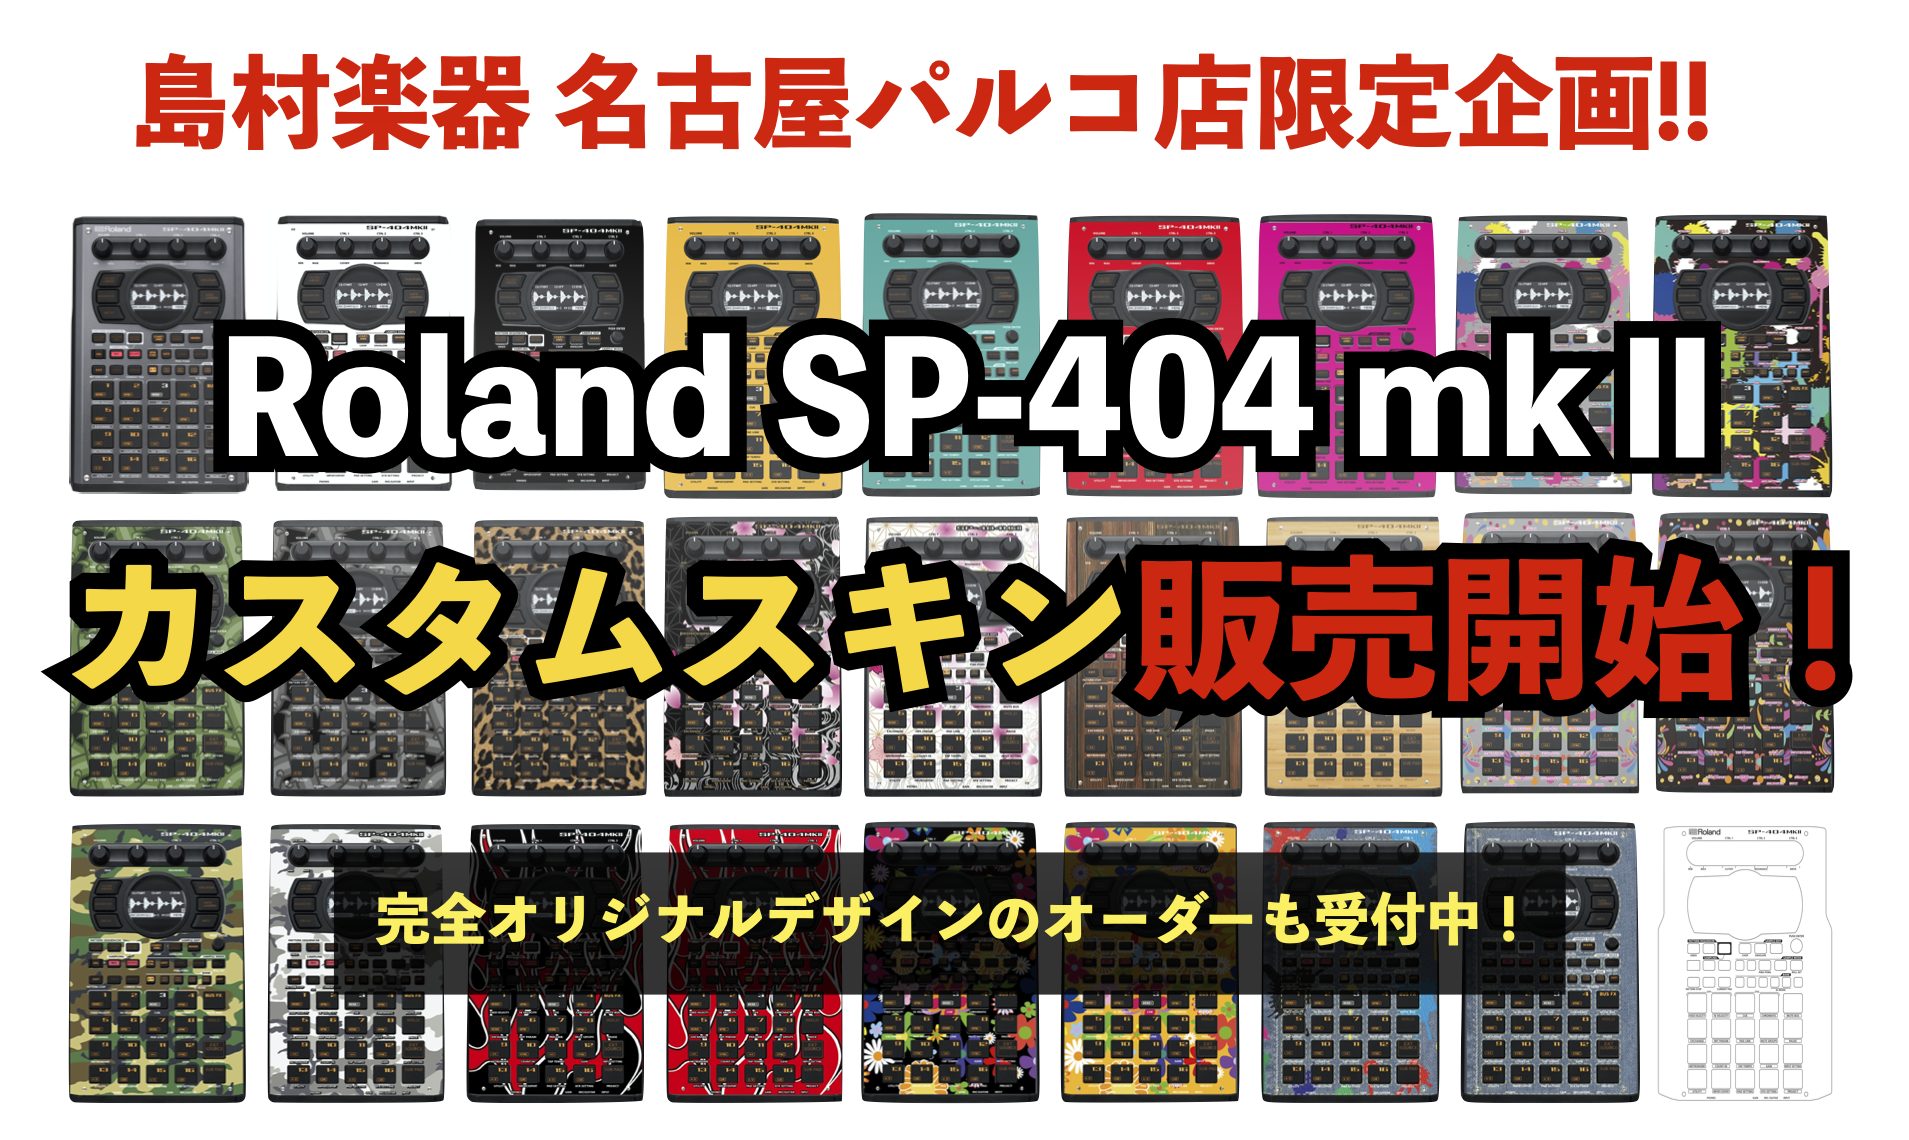 Roland SP-404 mkⅡのカスタムスキン制作・販売を開始！世界に一つの 